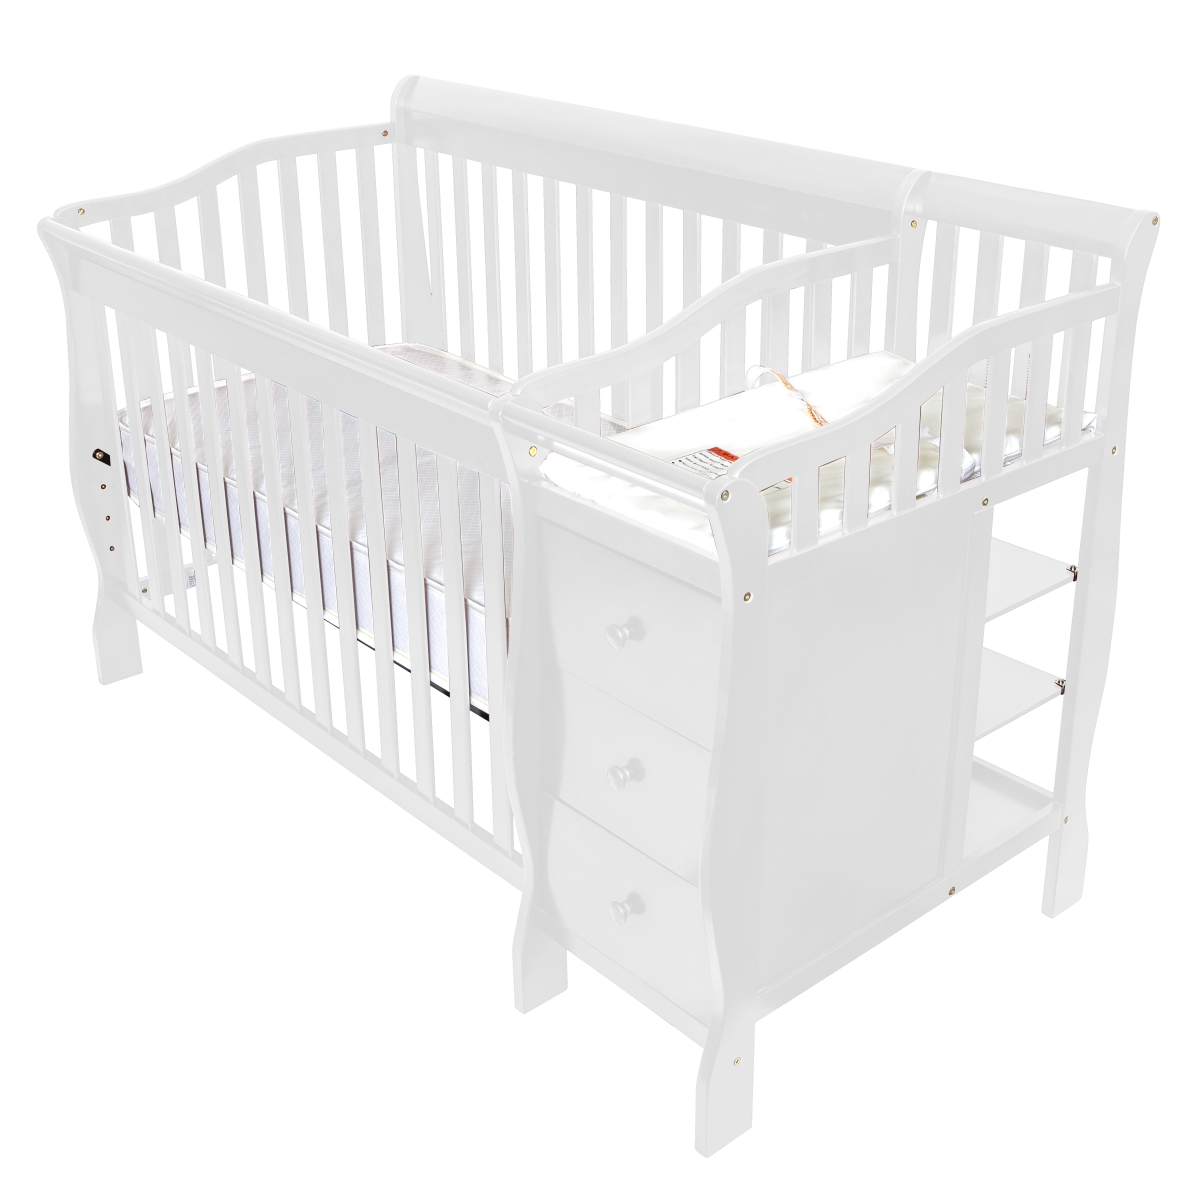 911-w Crib & Baby Changer, White - Full Size